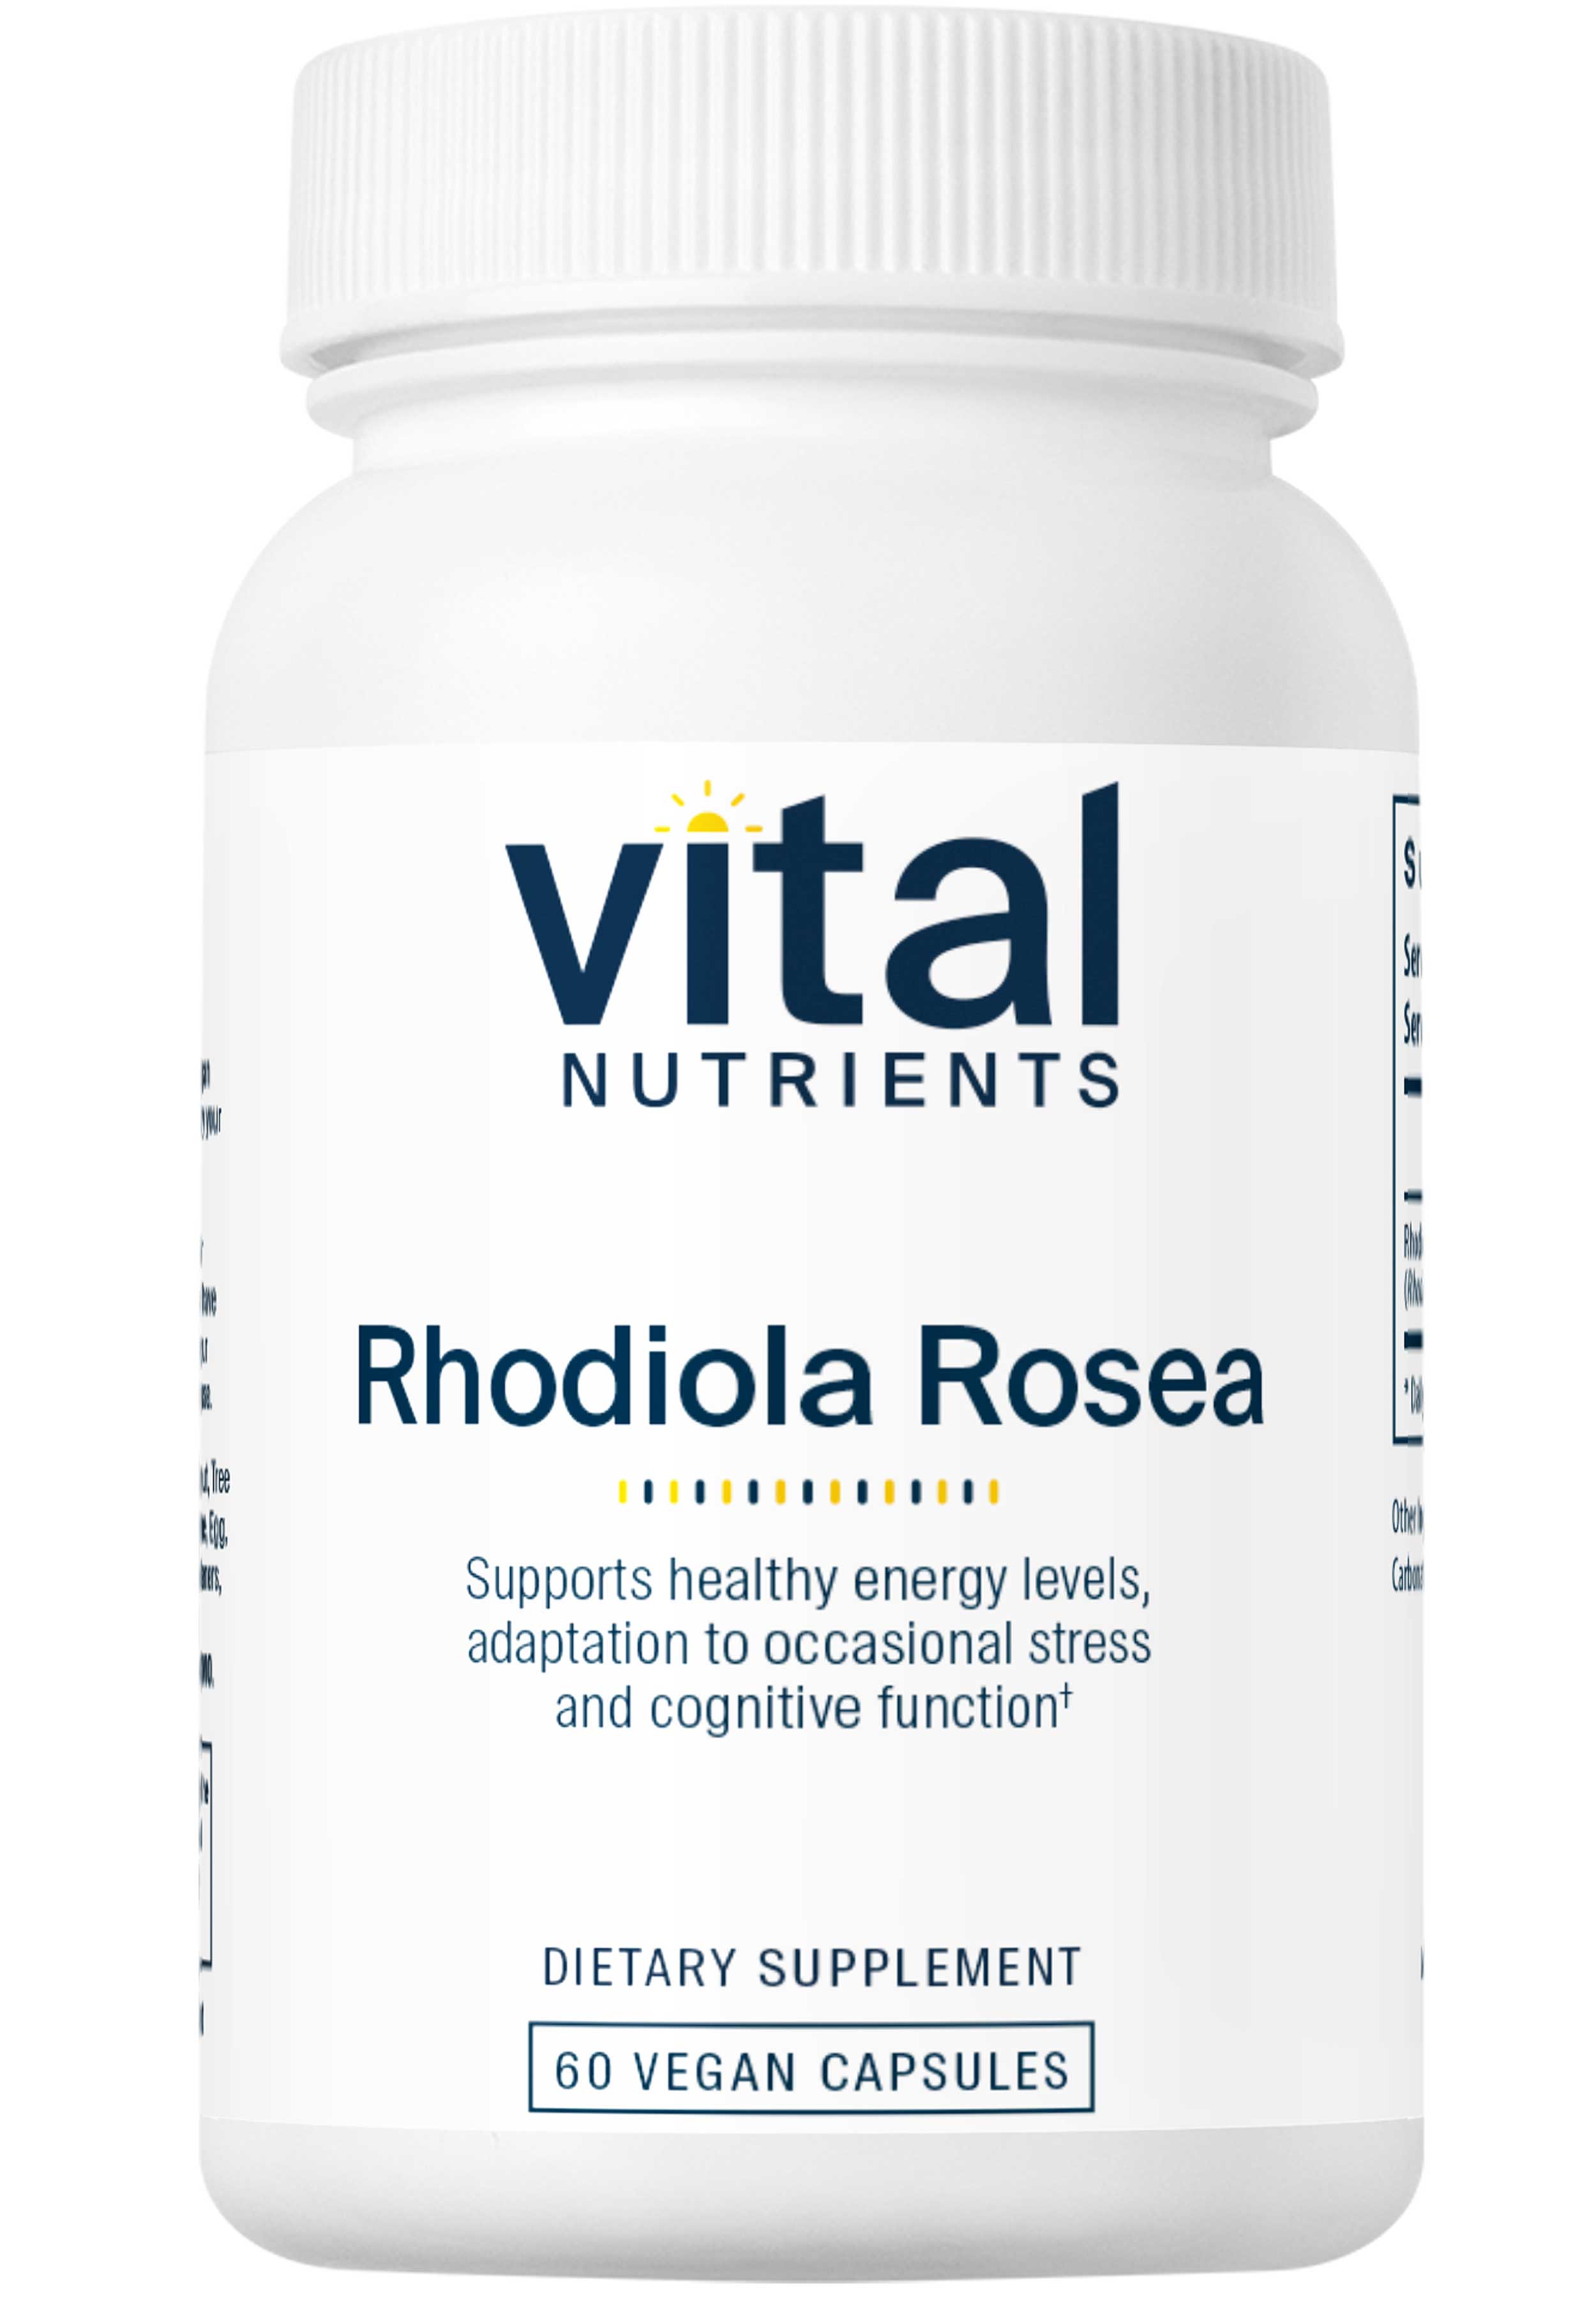 Vital Nutrients Rhodiola Rosea 3%